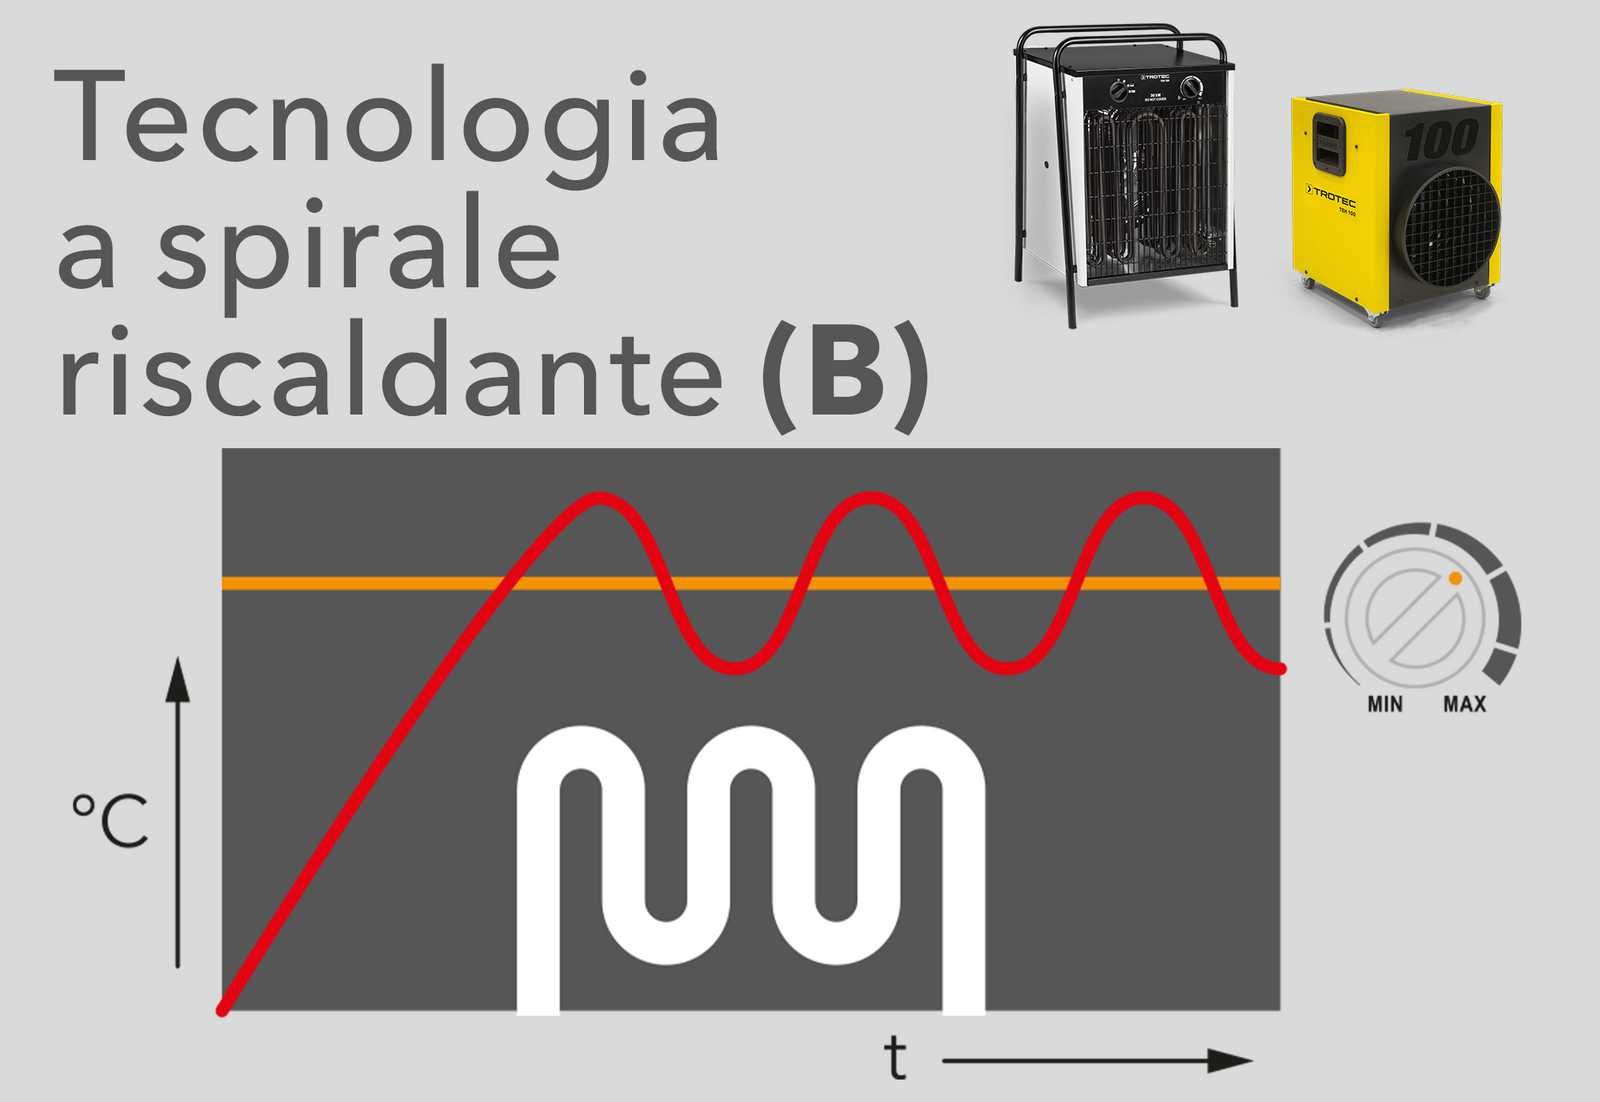 generatore aria calda elettrico master b3.3 epb con ventilatore